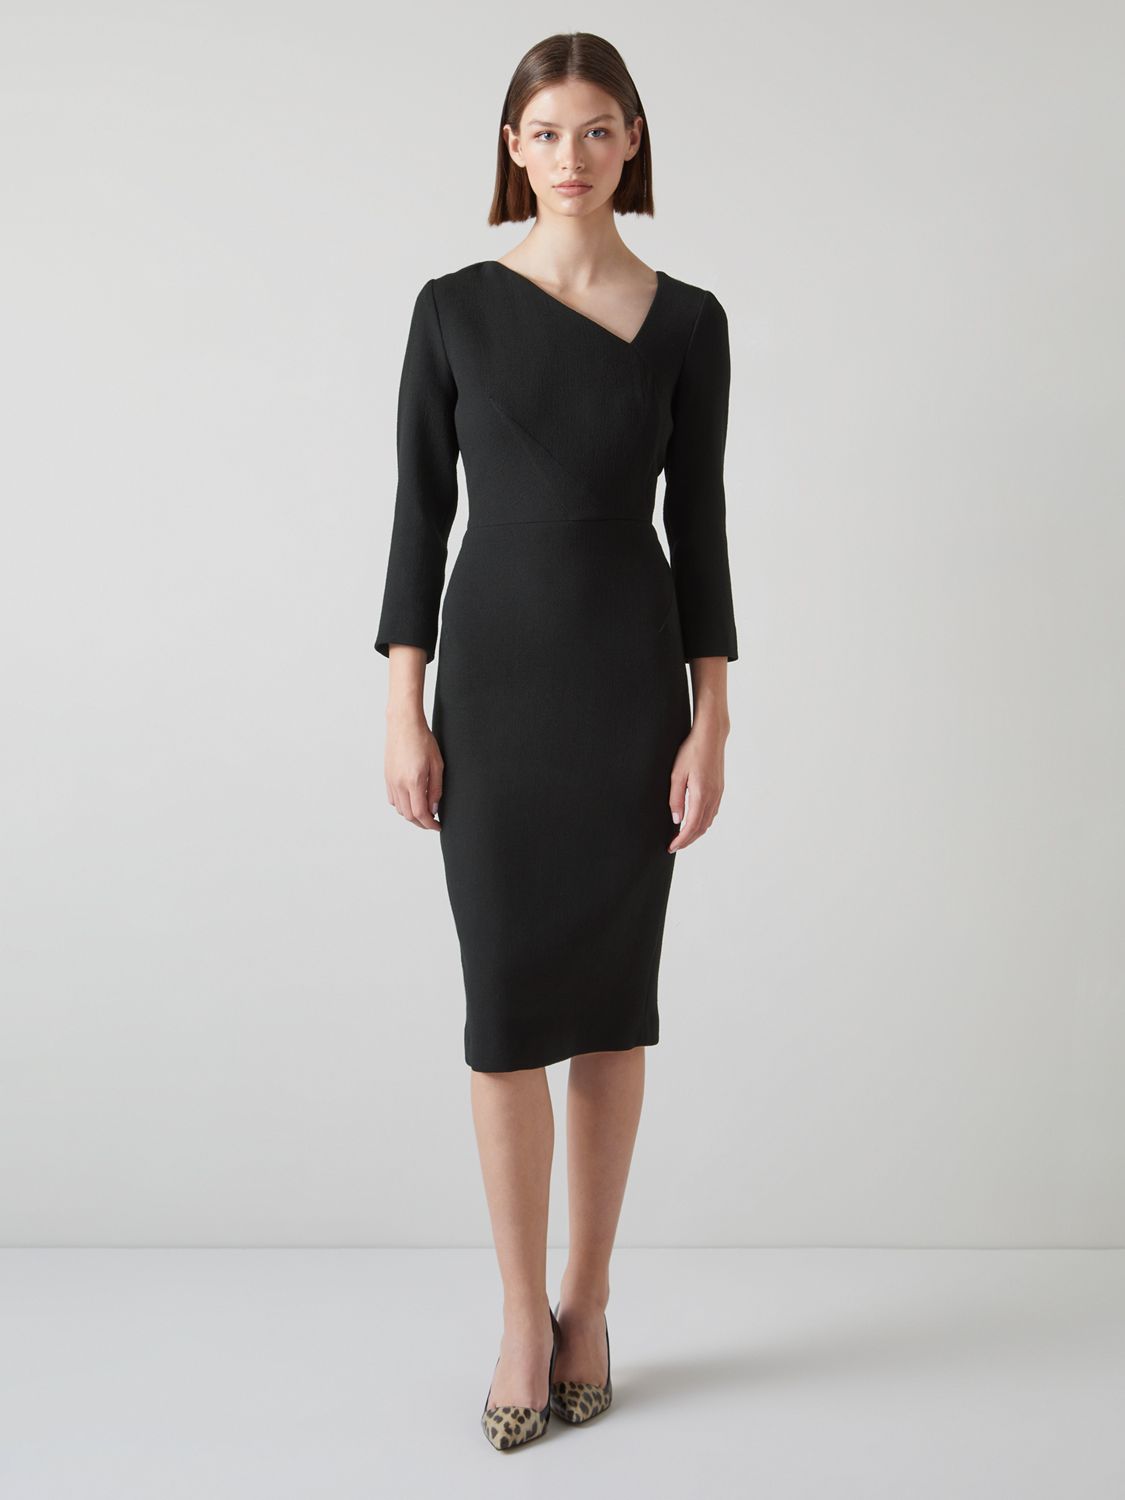 L.K.Bennett Alexis Dress, Black at John Lewis & Partners